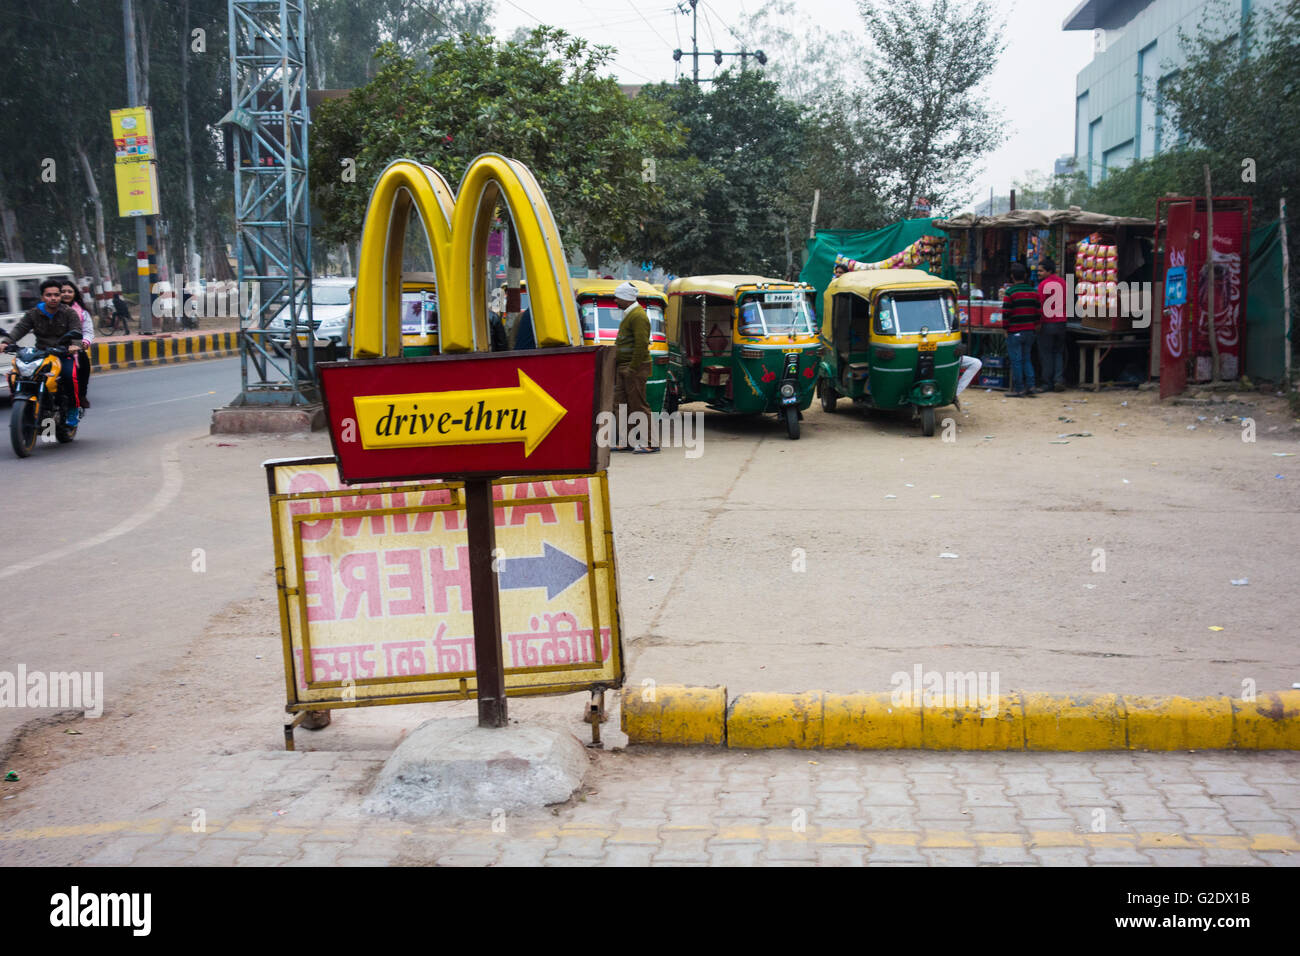 Un McDonald's drive-thru sign in Agra, Inde Banque D'Images